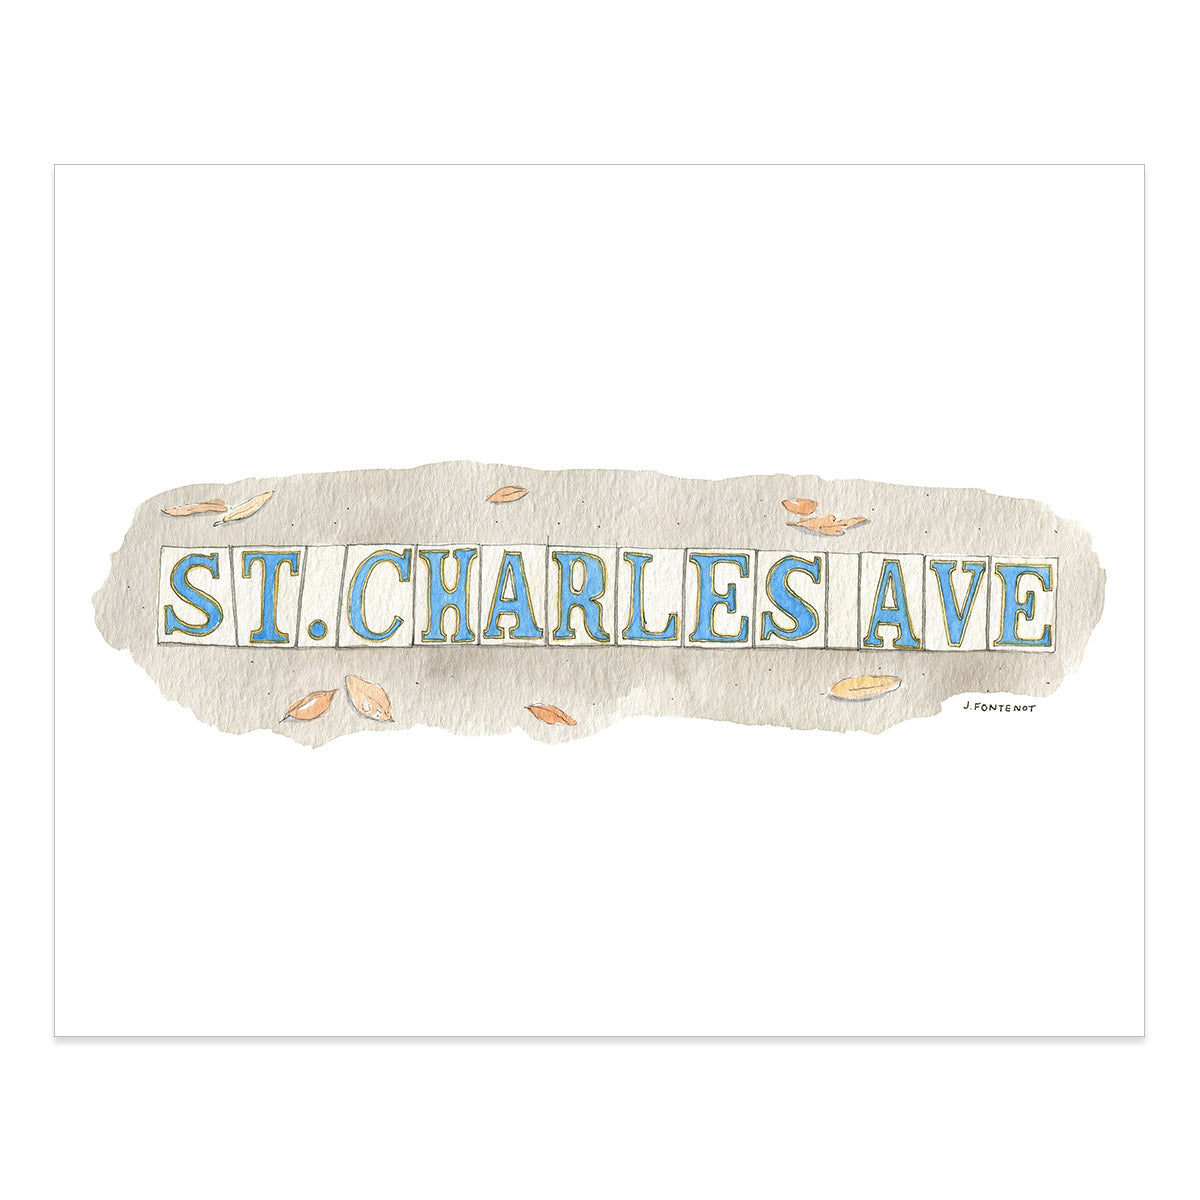 St. Charles Ave. Street Sign